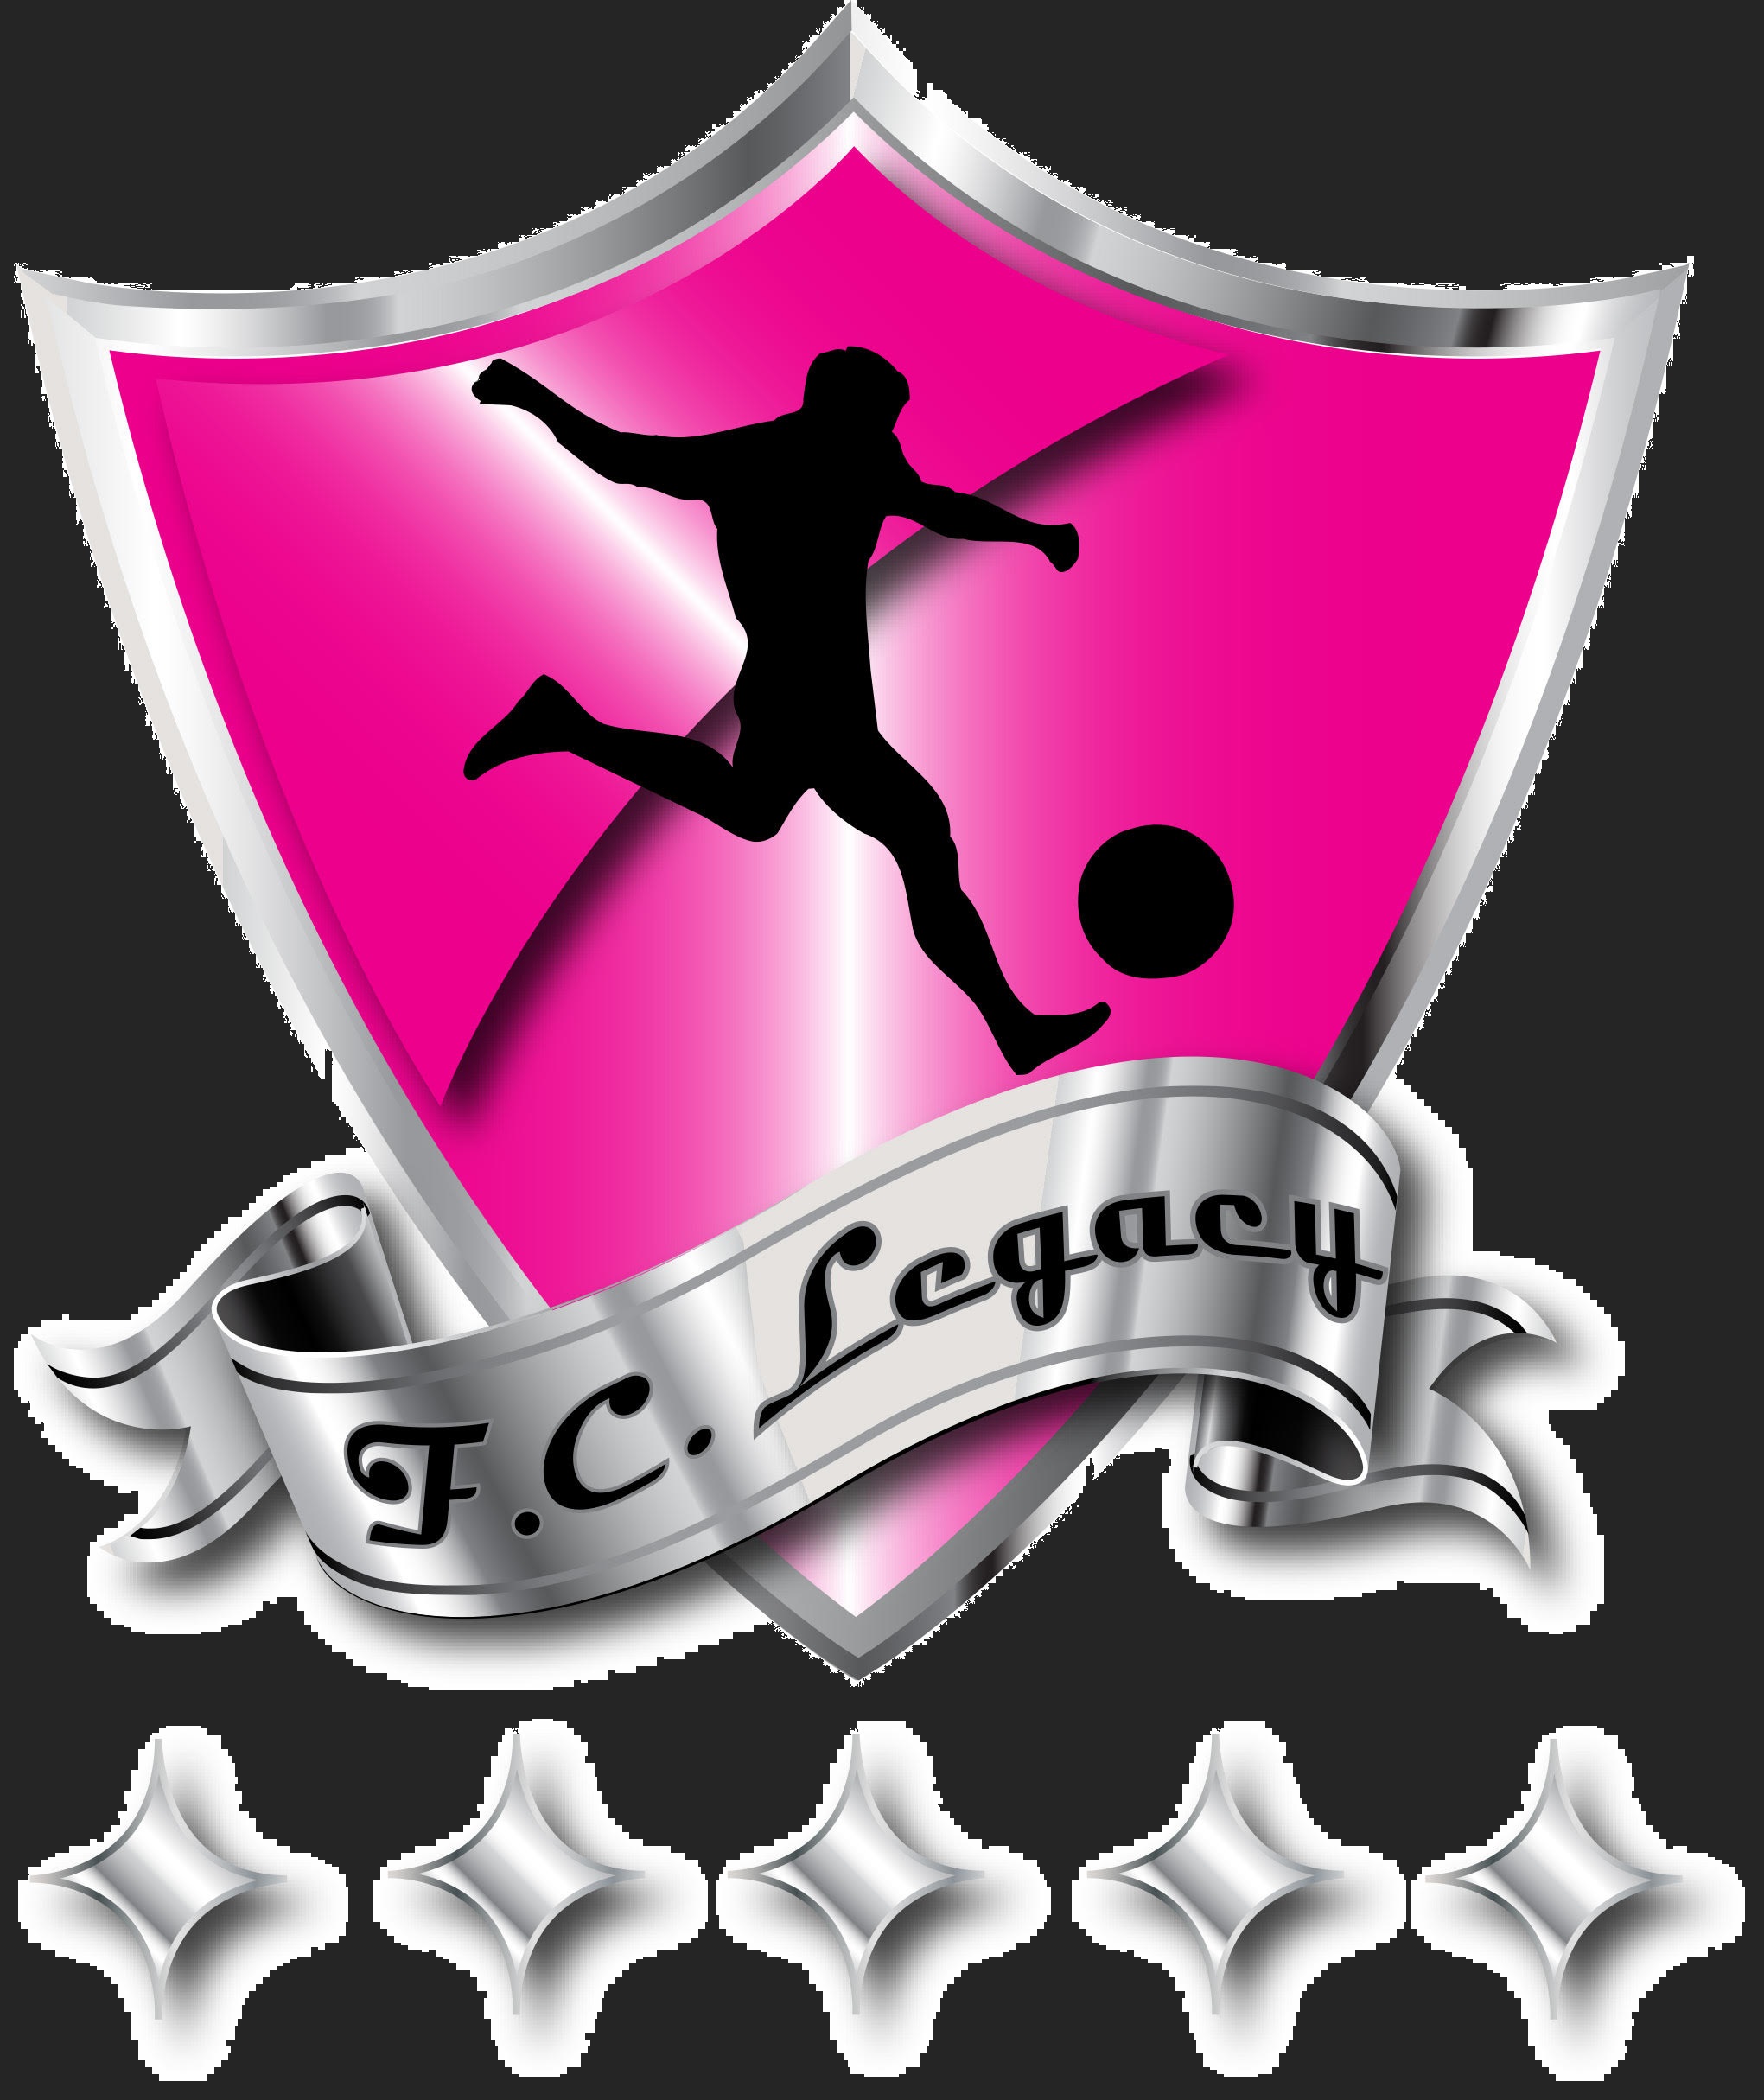 FC Legacy team badge